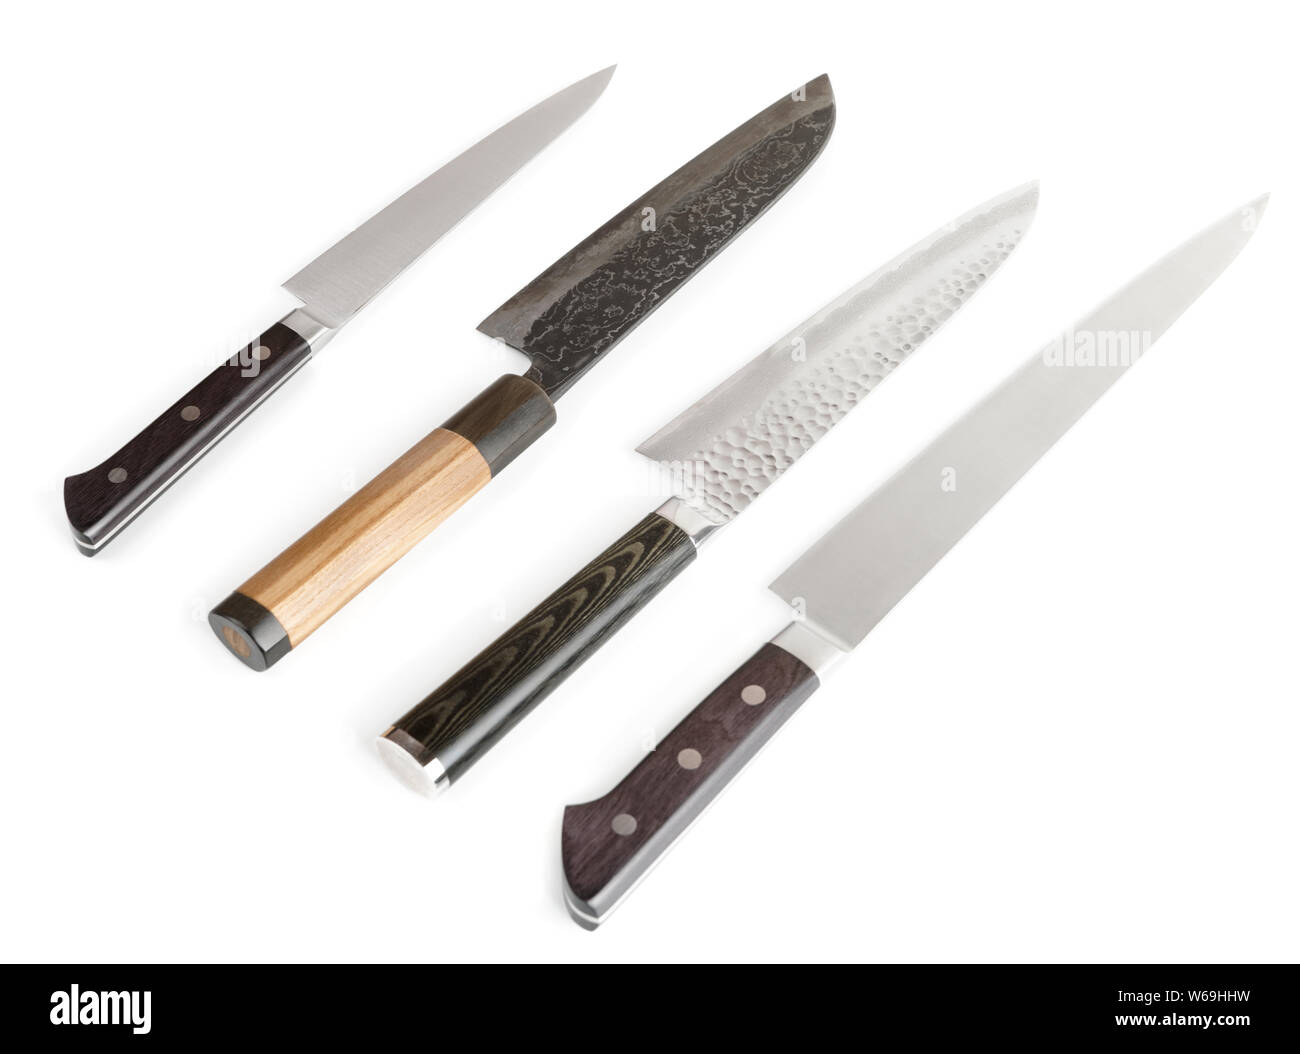 Cuchillo japonés de cocina, de JapanBargain, de acero inoxidable